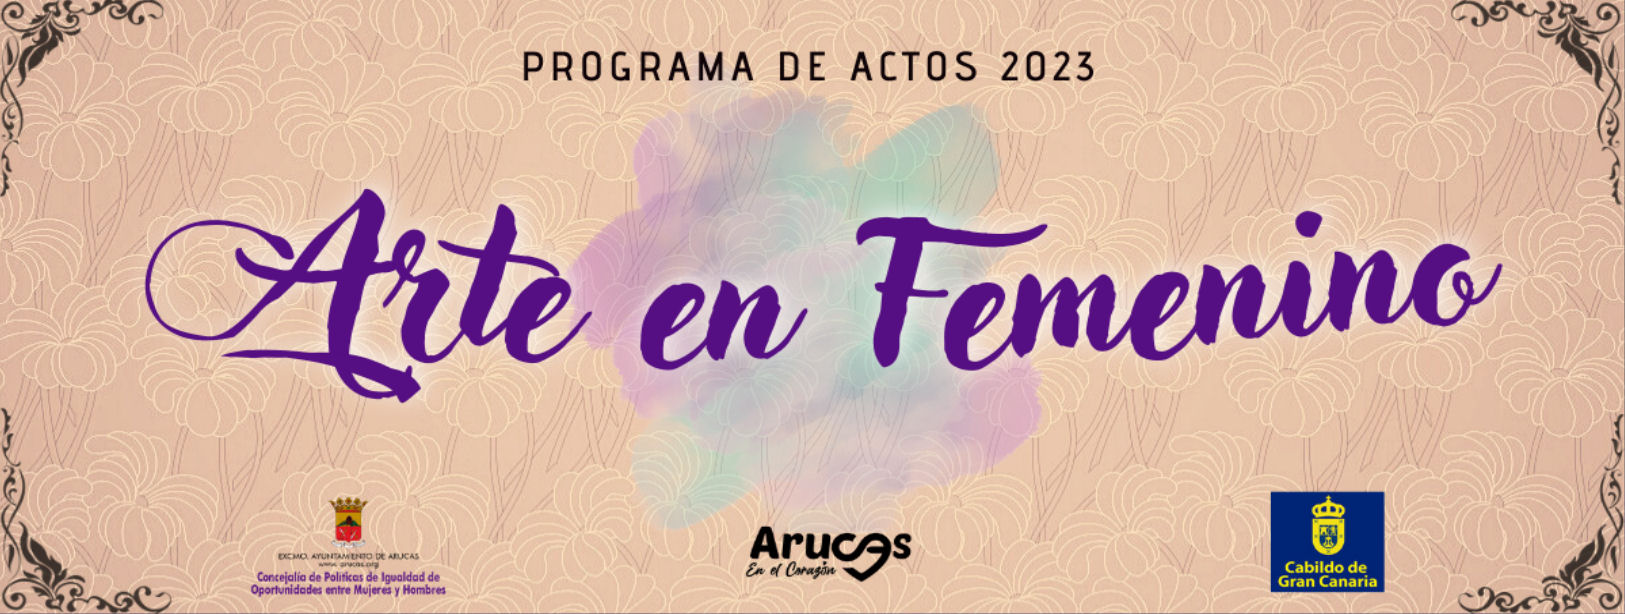 ARTE EN FEMENINO 2023